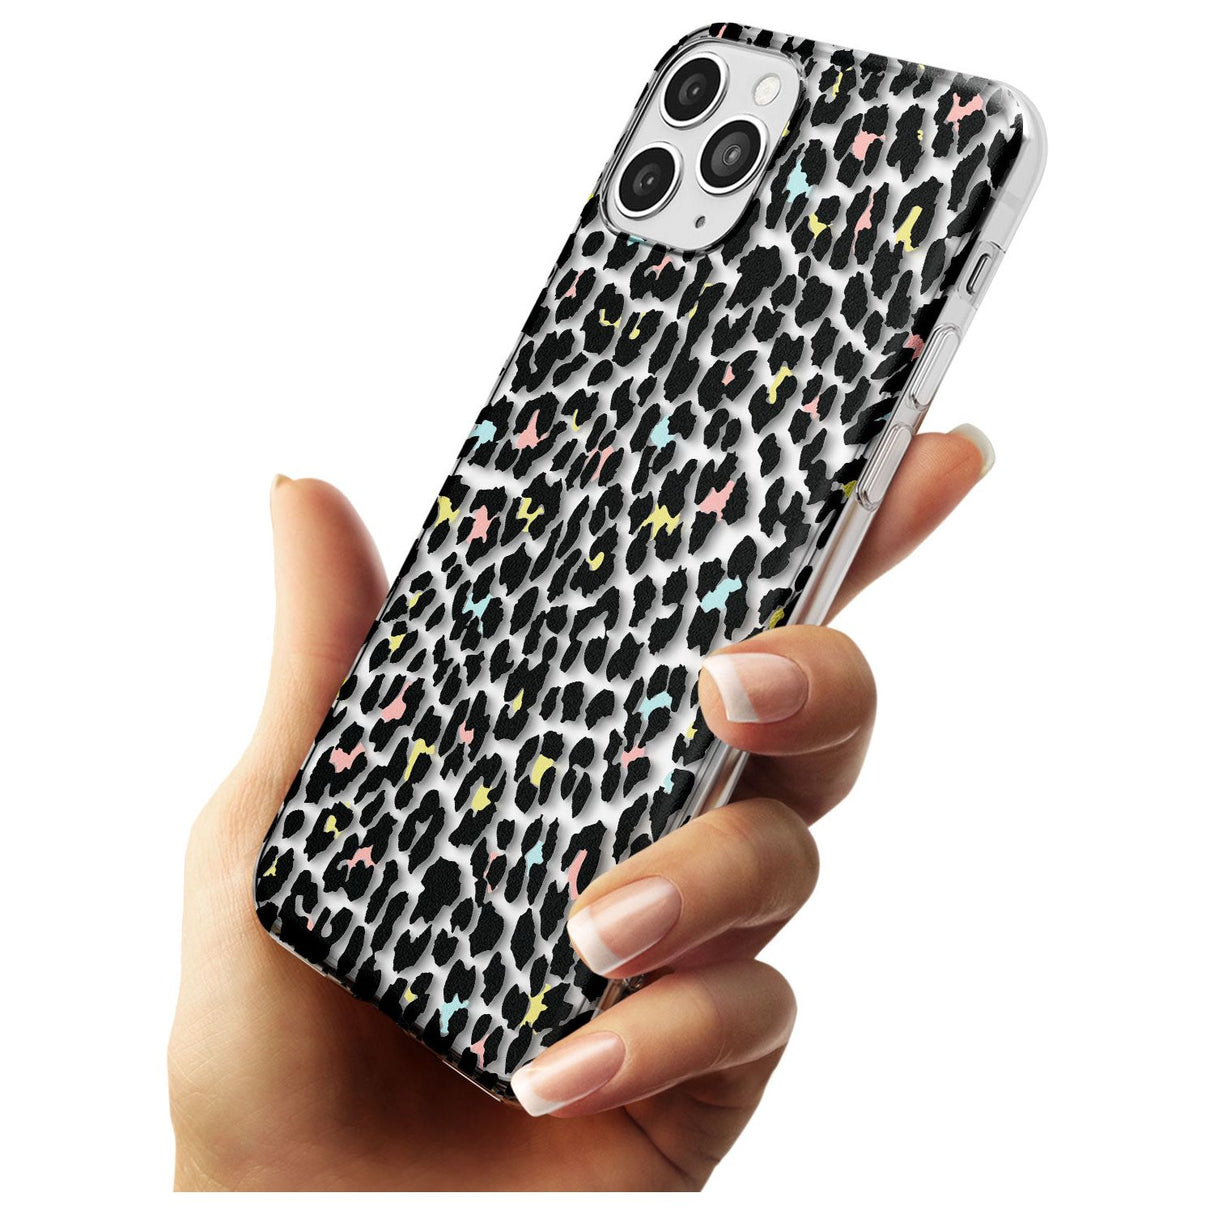 Mixed Pastels Leopard Print - Transparent Slim TPU Phone Case for iPhone 11 Pro Max